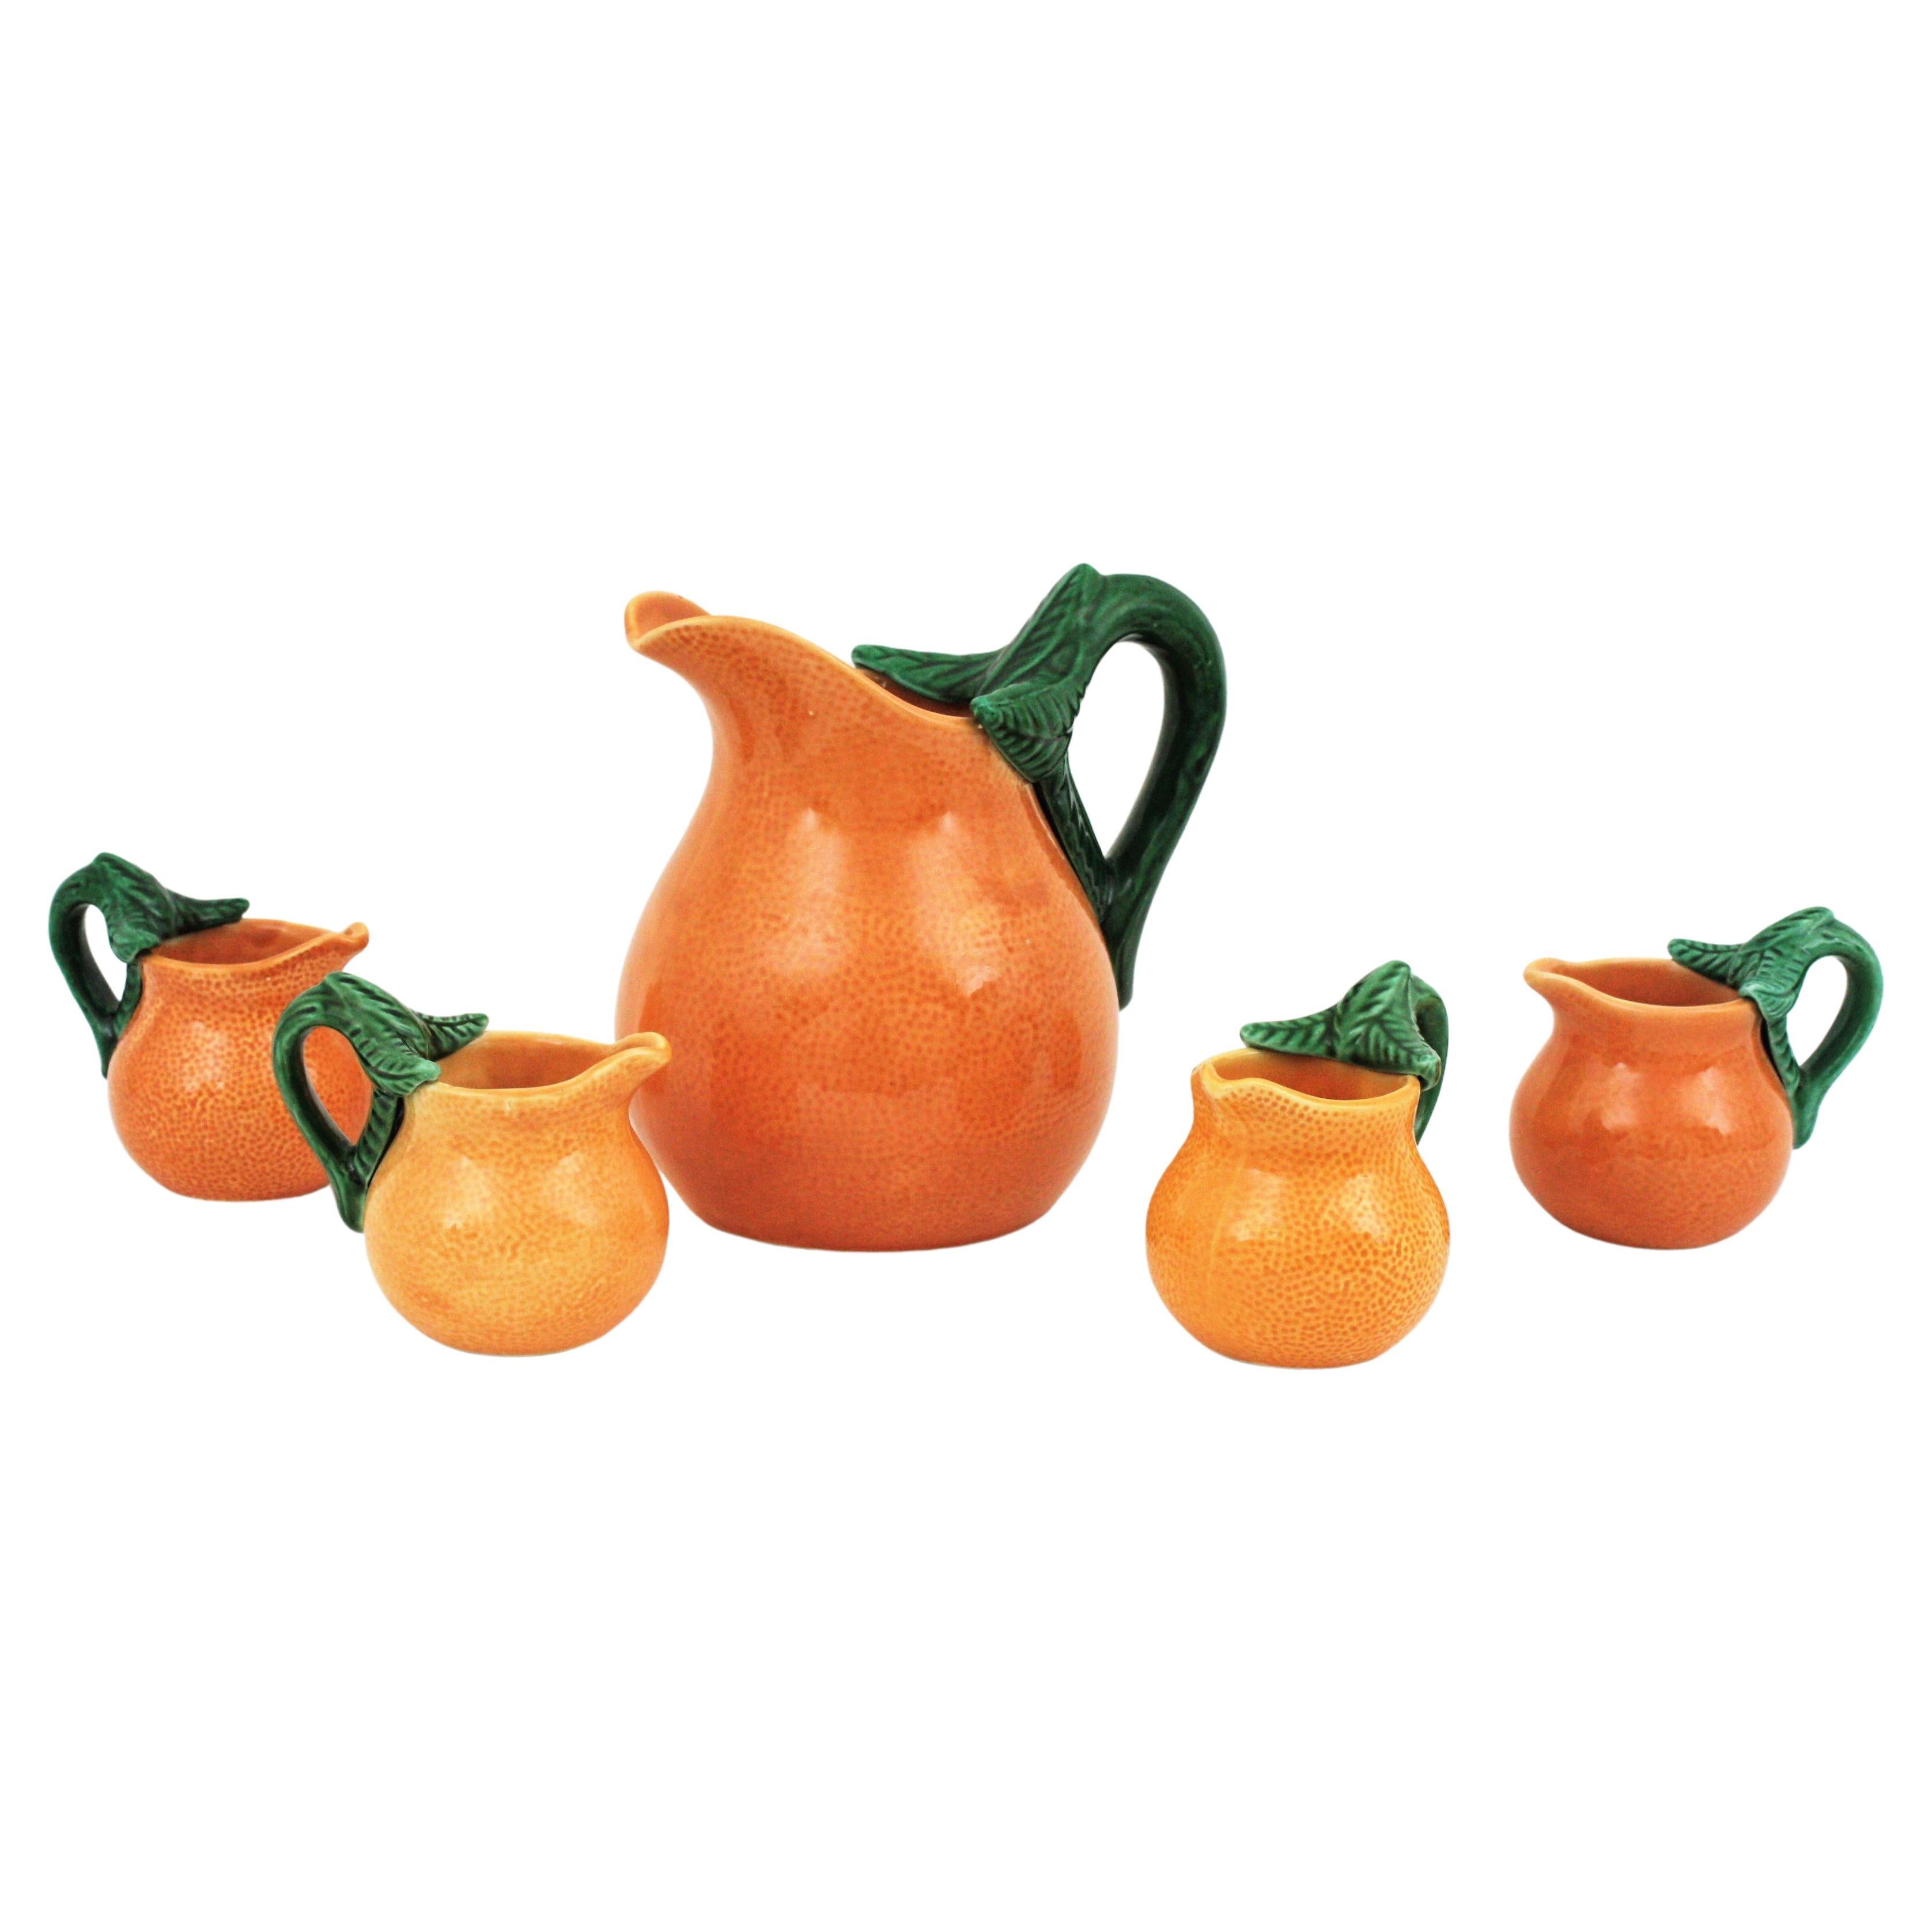 https://a.1stdibscdn.com/orange-glazed-ceramic-majolica-coffee-or-tea-set-for-four-for-sale/f_10962/f_332088621682010914700/f_33208862_1682010915919_bg_processed.jpg